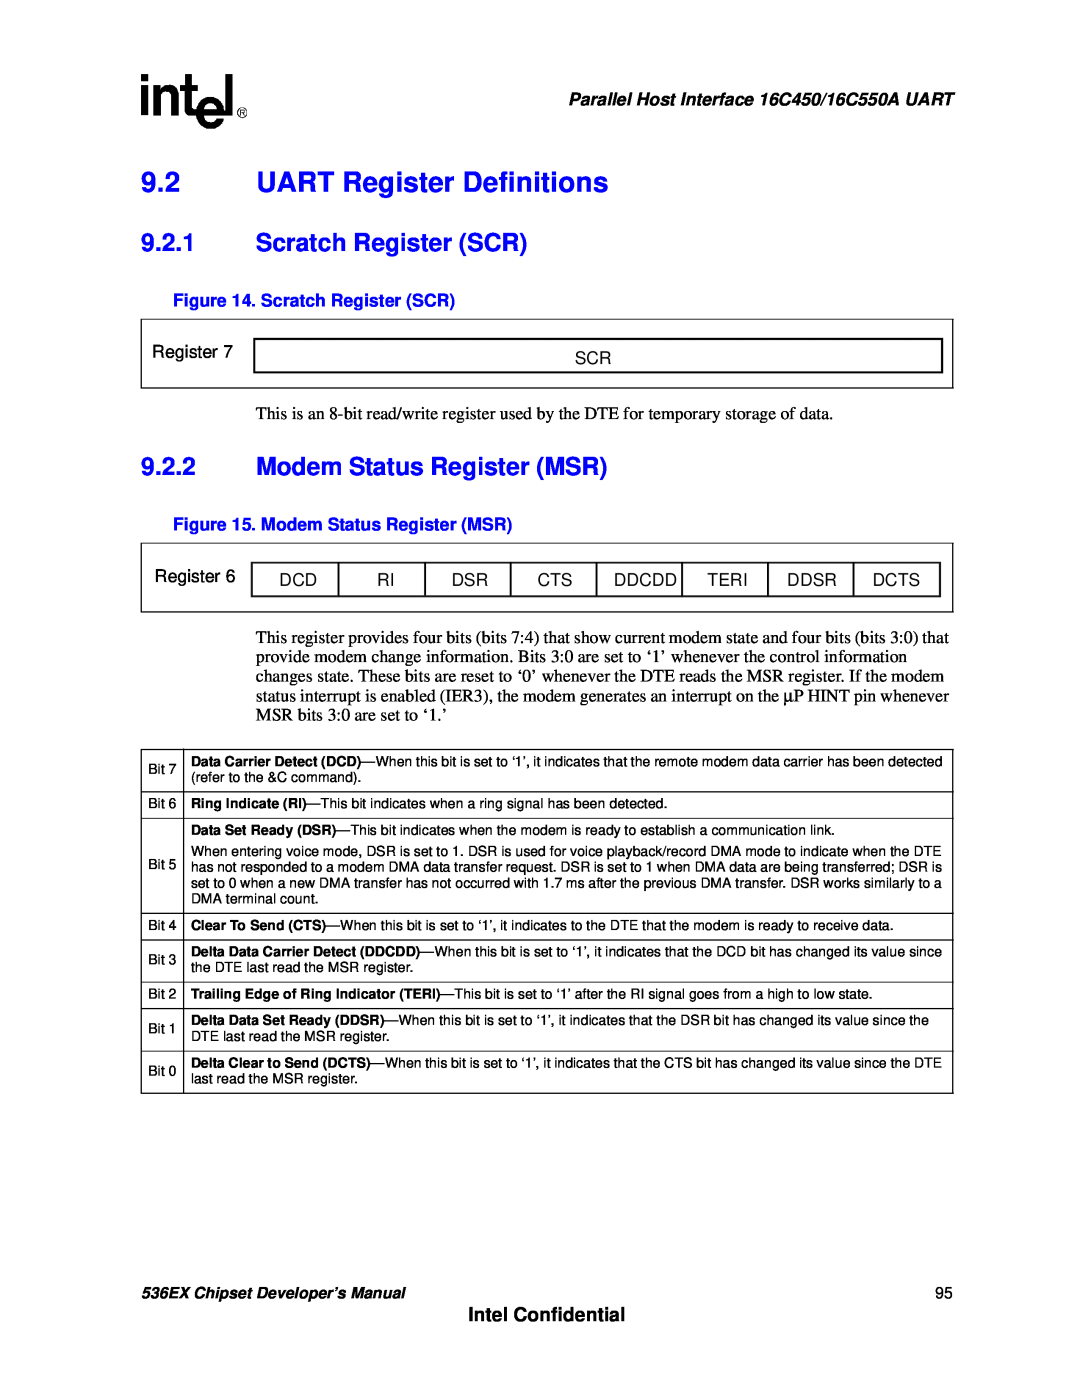 Intel 536EX manual 9.2.1Scratch Register SCR, 9.2.2Modem Status Register MSR, Intel Confidential 